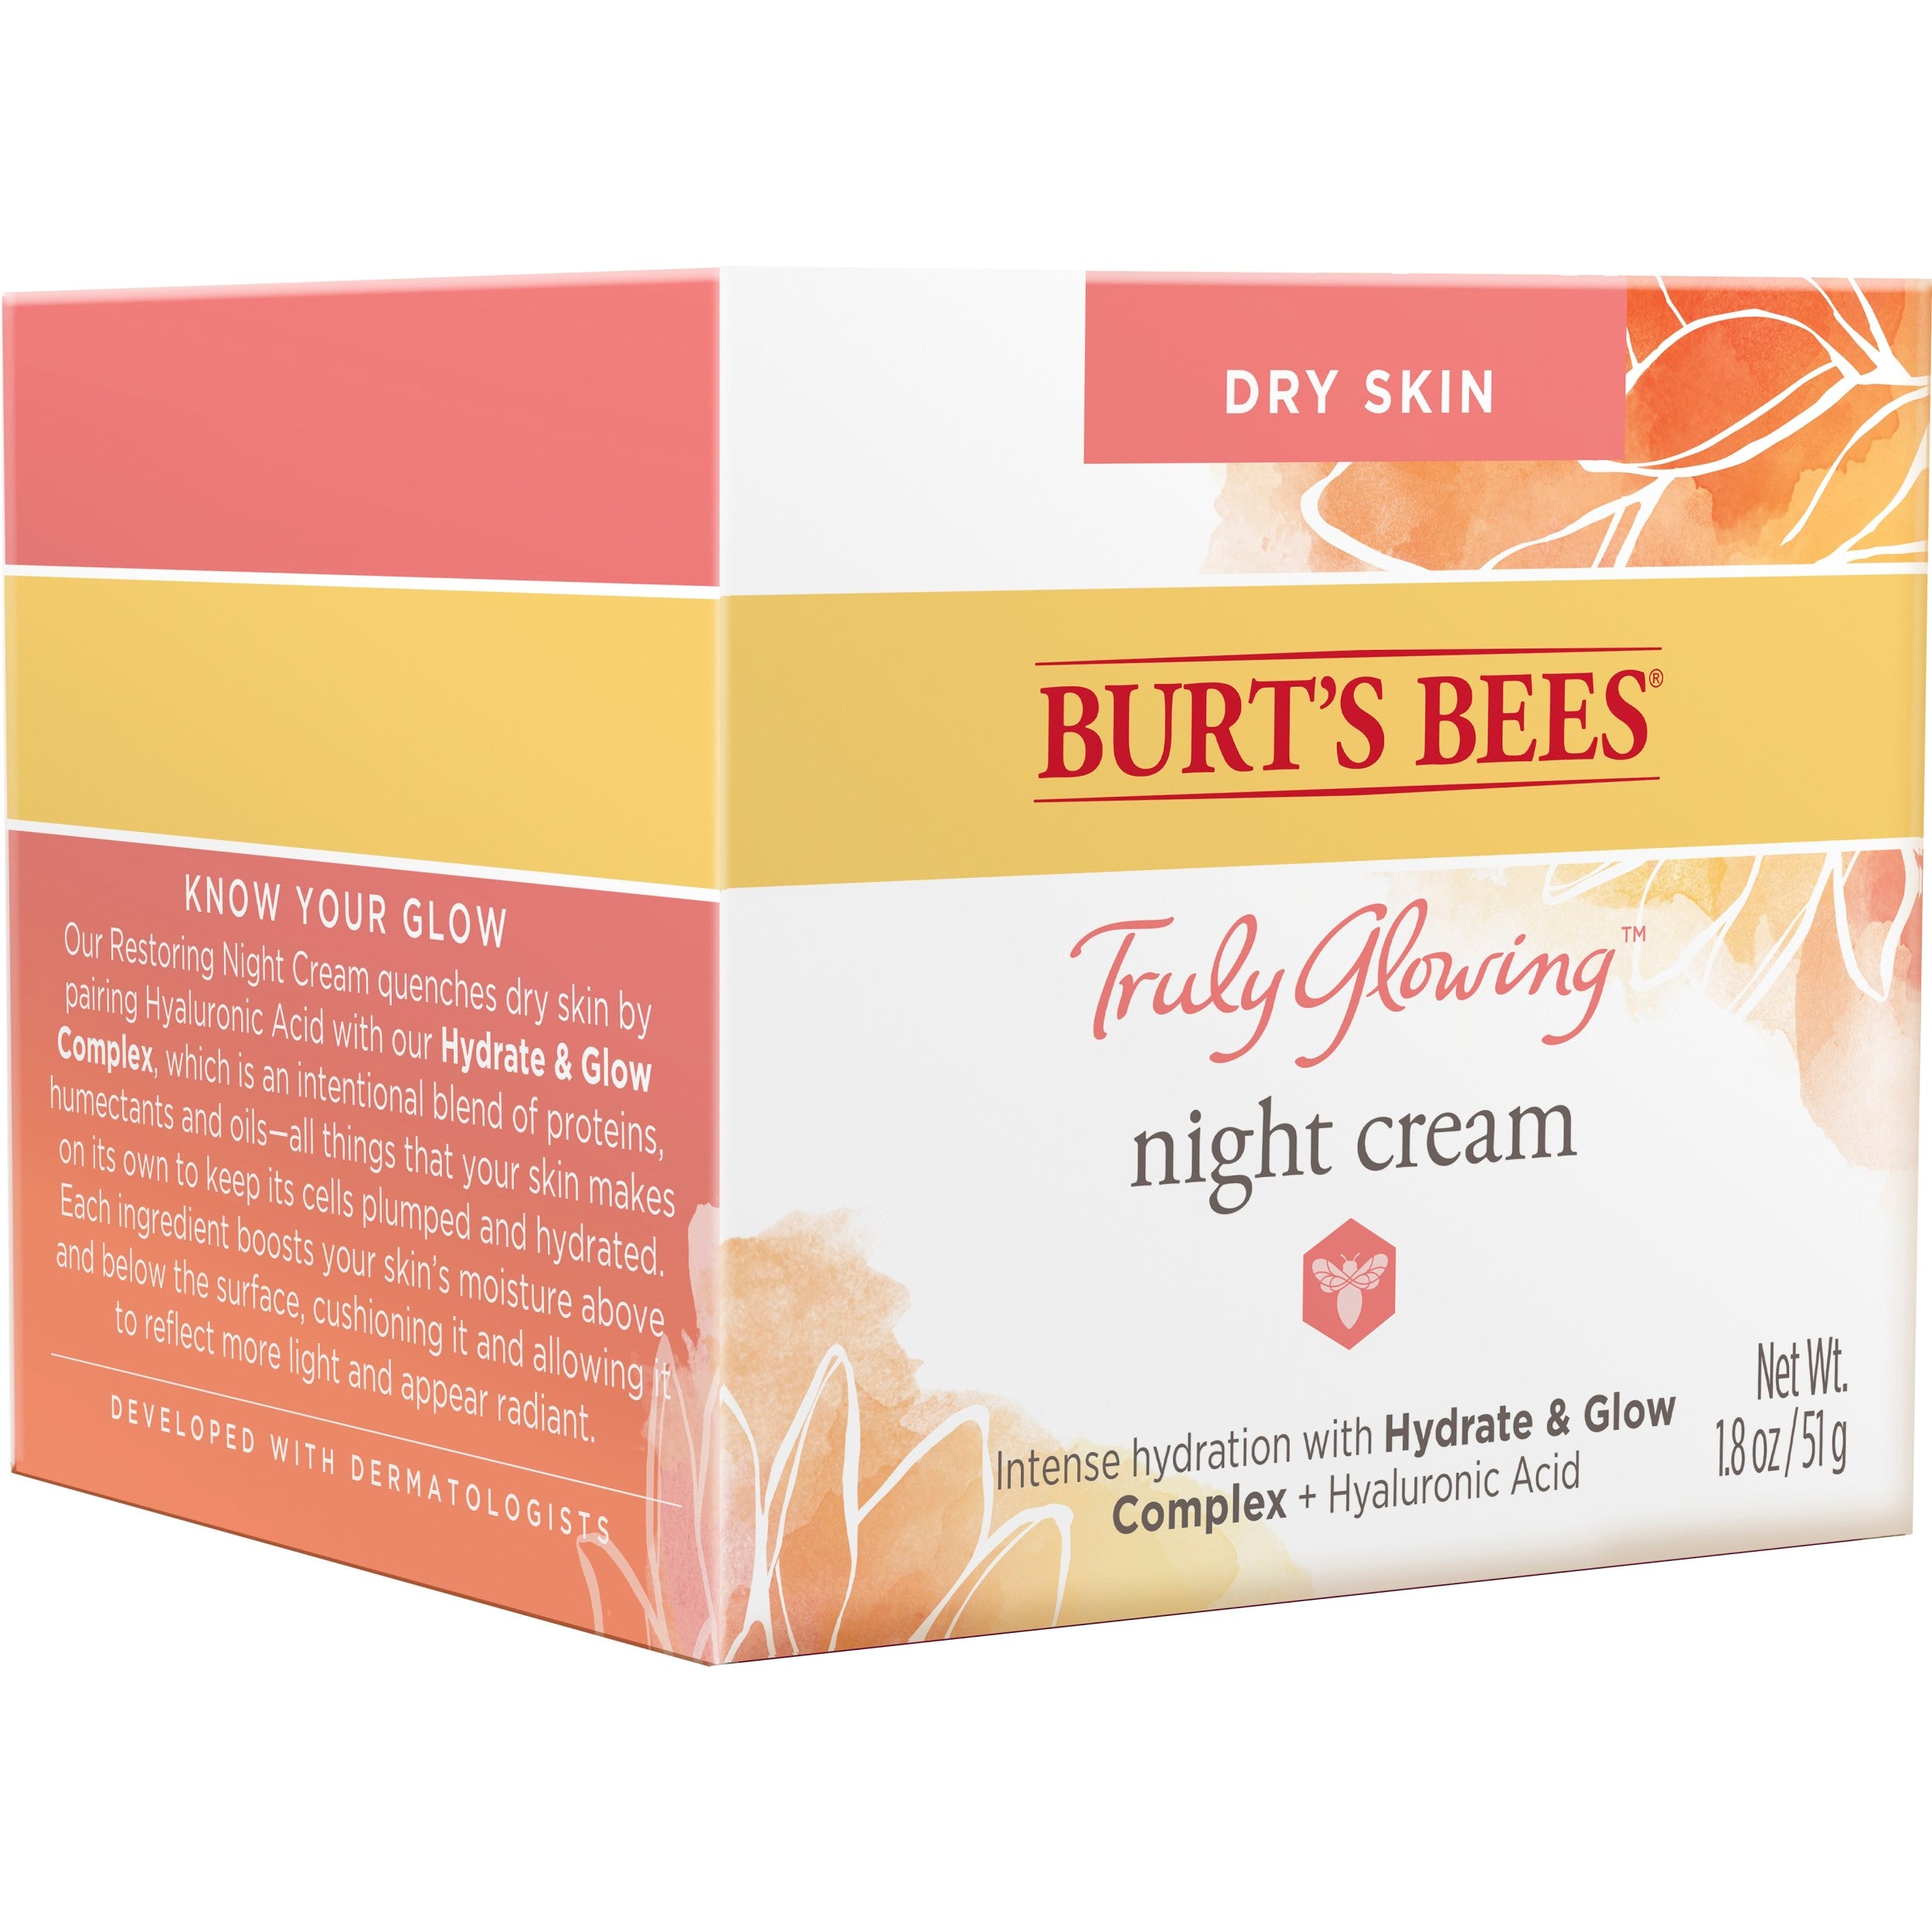 BURT’S BEES Truly Glowing Night Cream